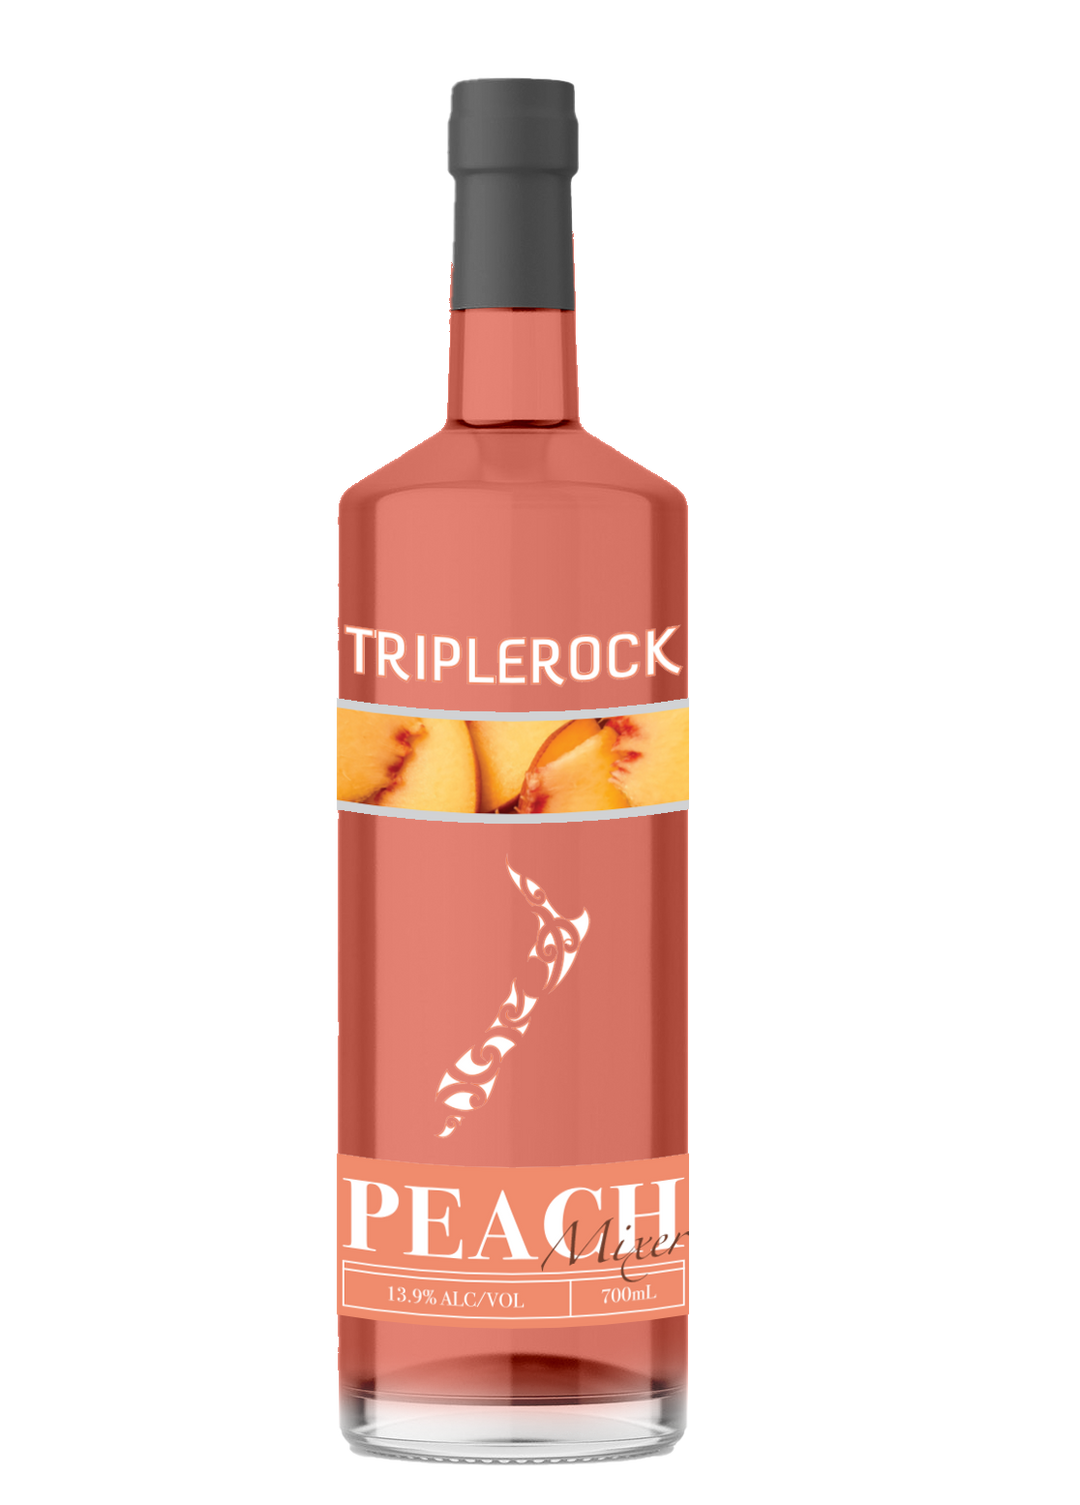 Triplerock Peach Mixer Liqueurs 700ml x6 Bottles 13.9% ALC/VOL.